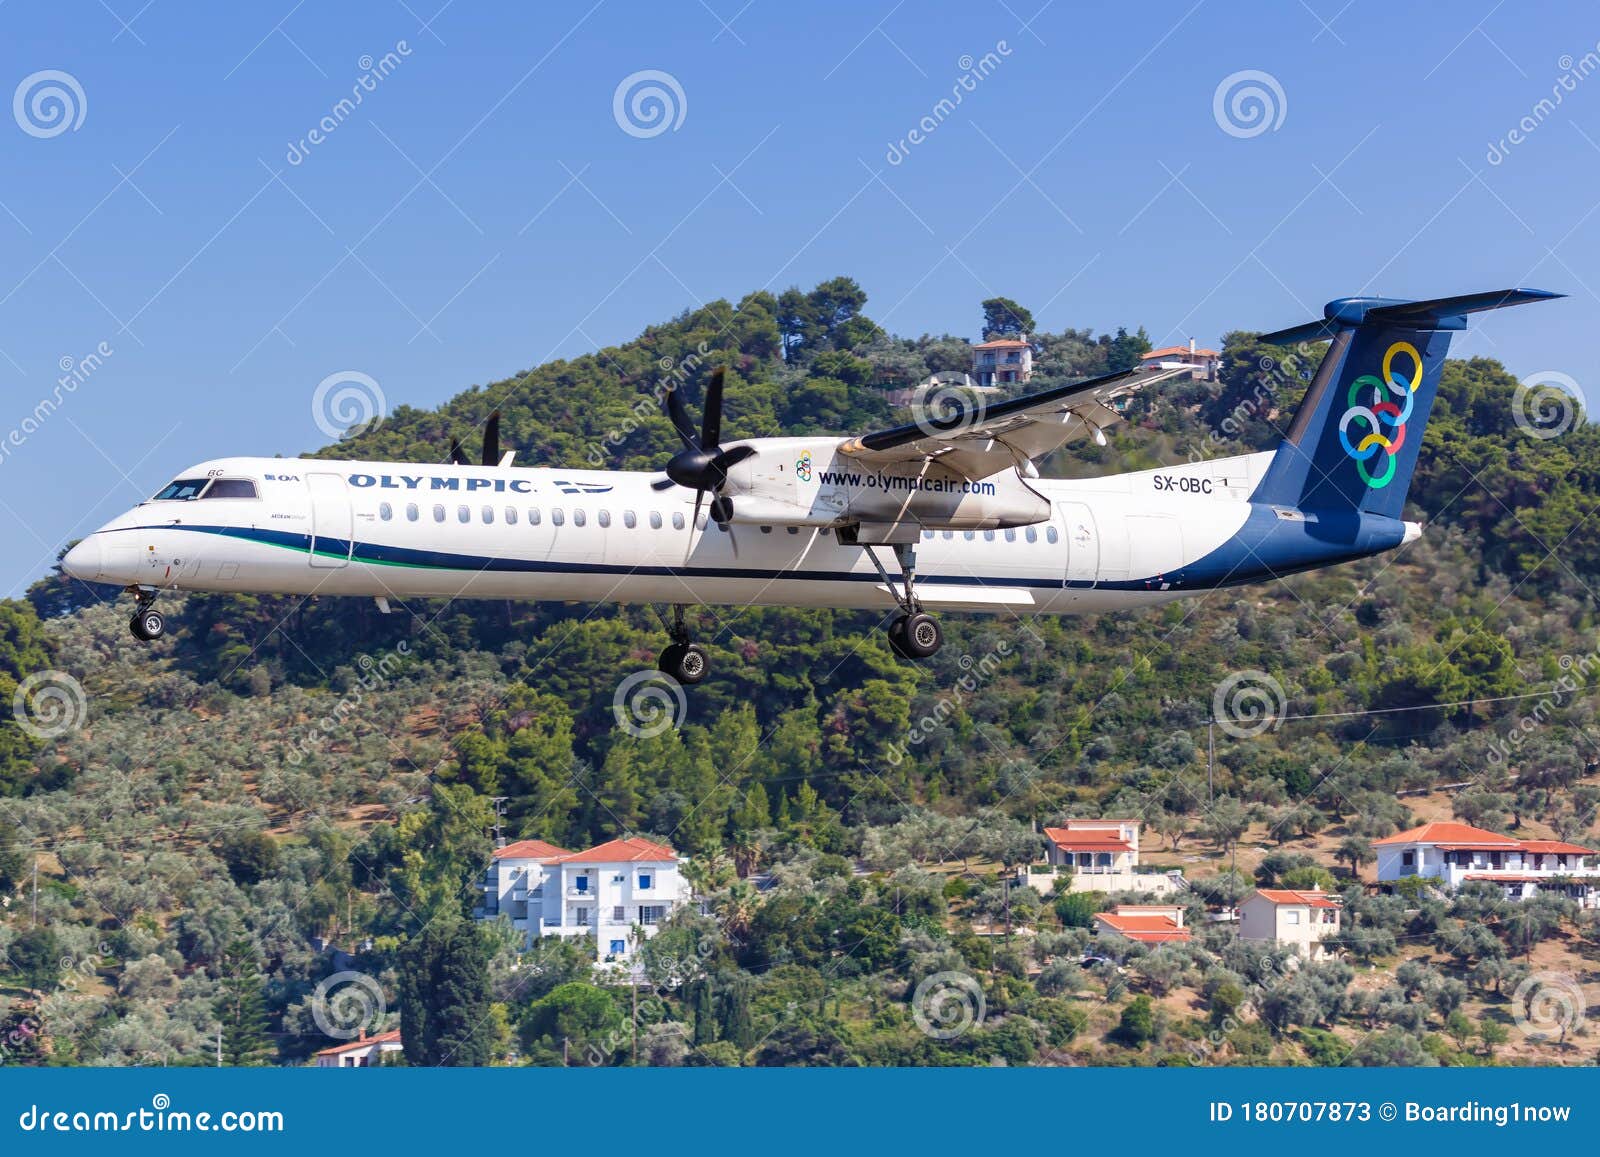 Olympic Air Bombardier Airplane Skiathos Airport Editorial Stock Photo - Image of sxobc, dhc8400: 180707873